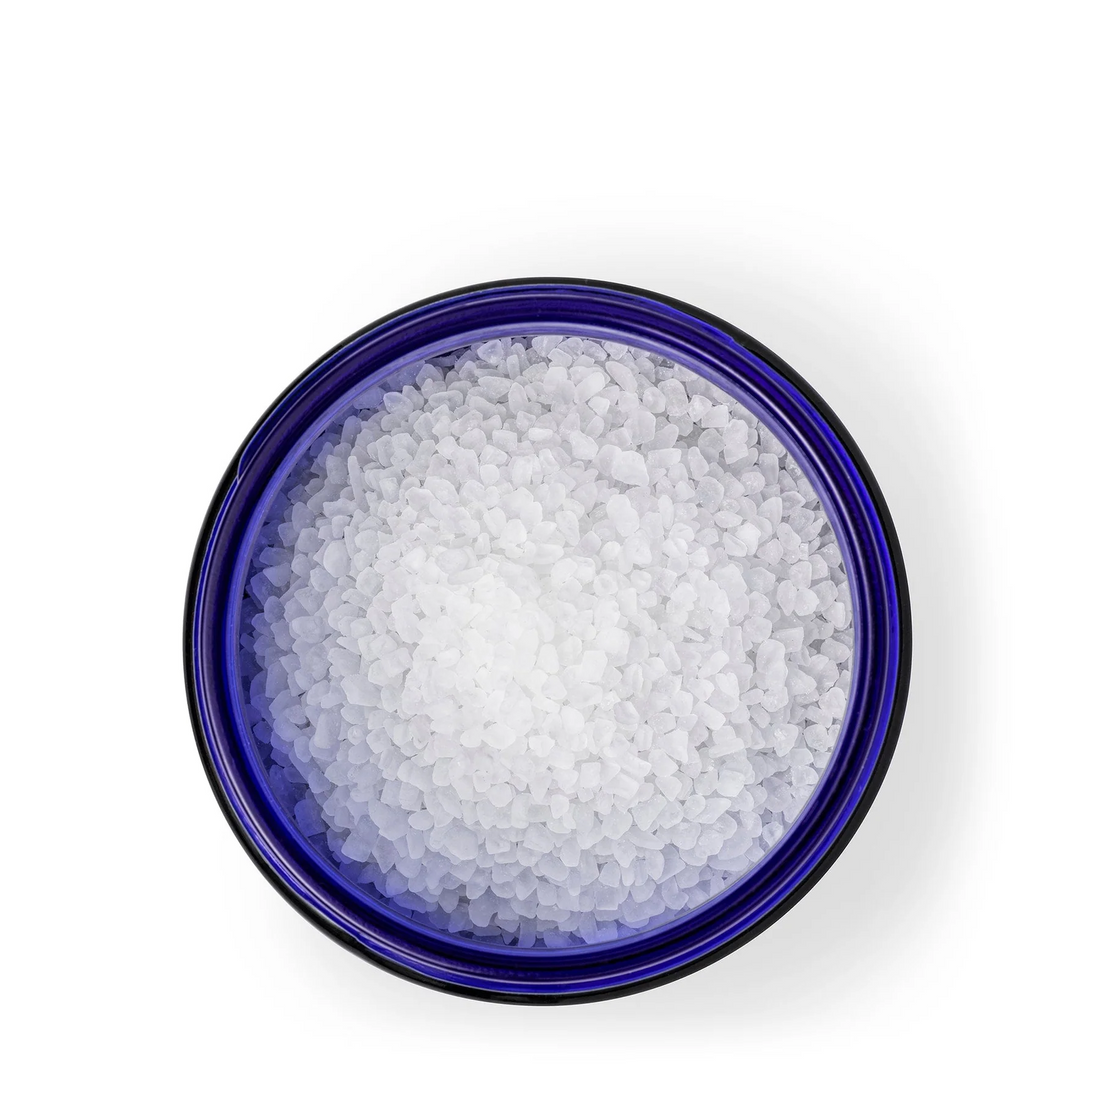 Lavender Bath Salts 350g